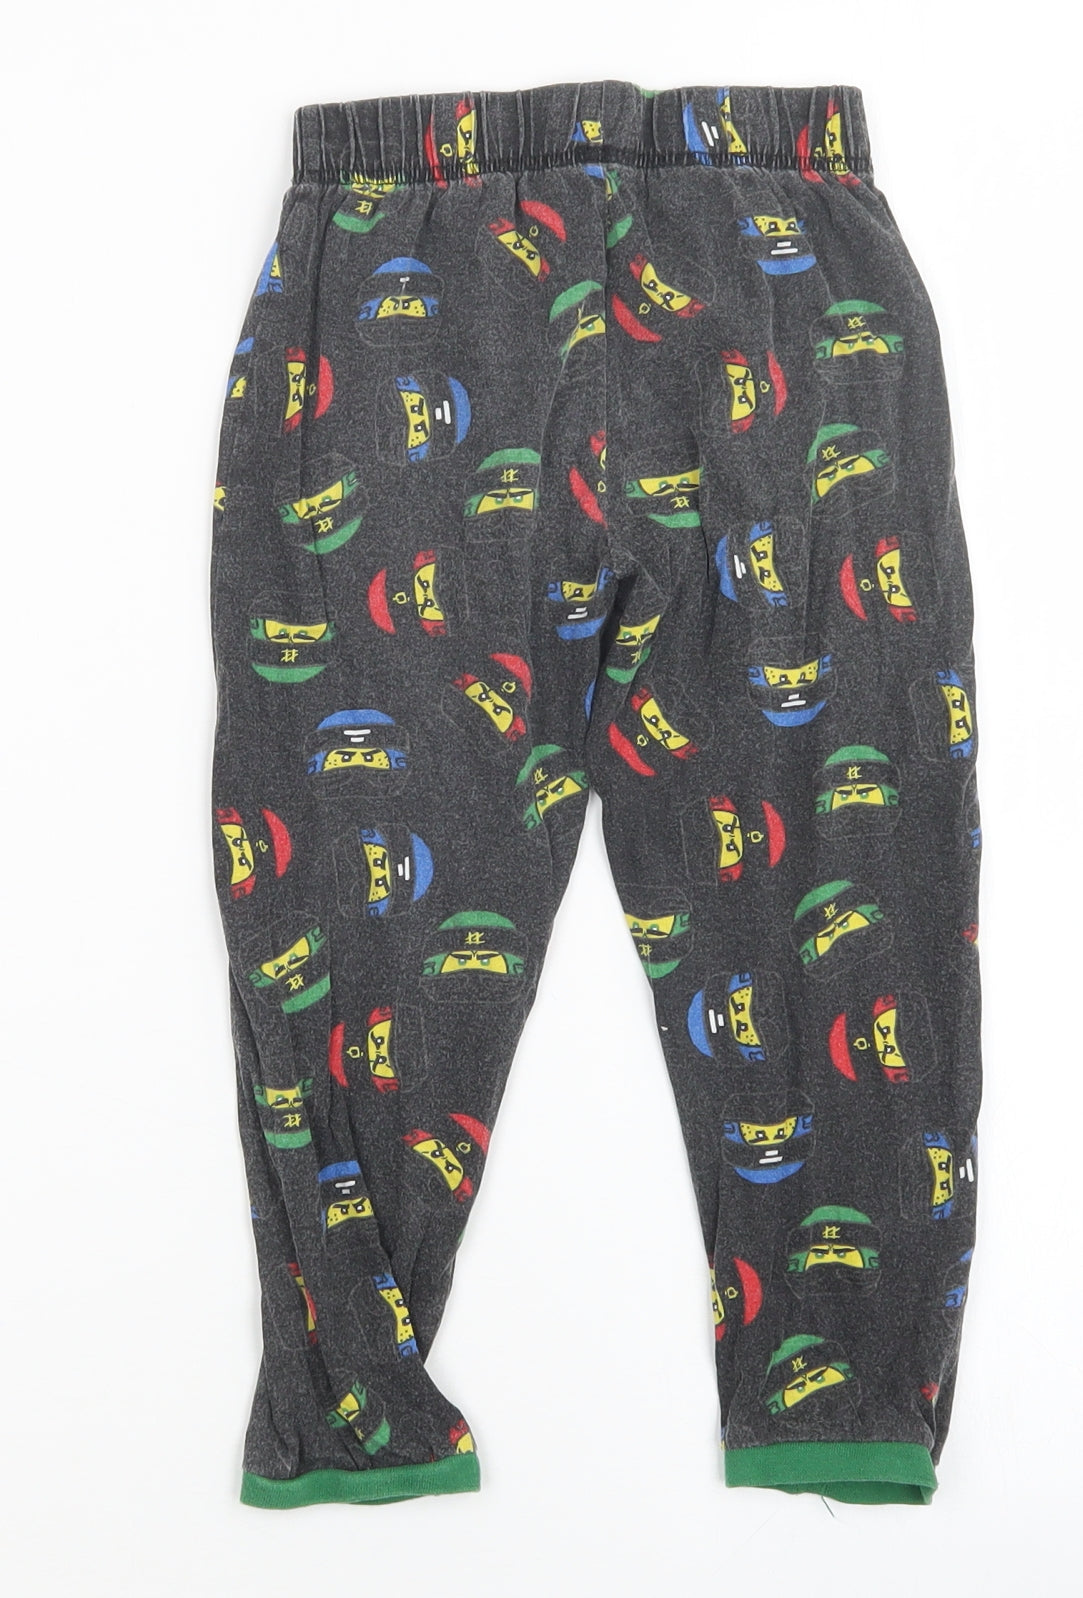 George Boys Multicoloured    Pyjama Pants Size 4-5 Years  - ninjago